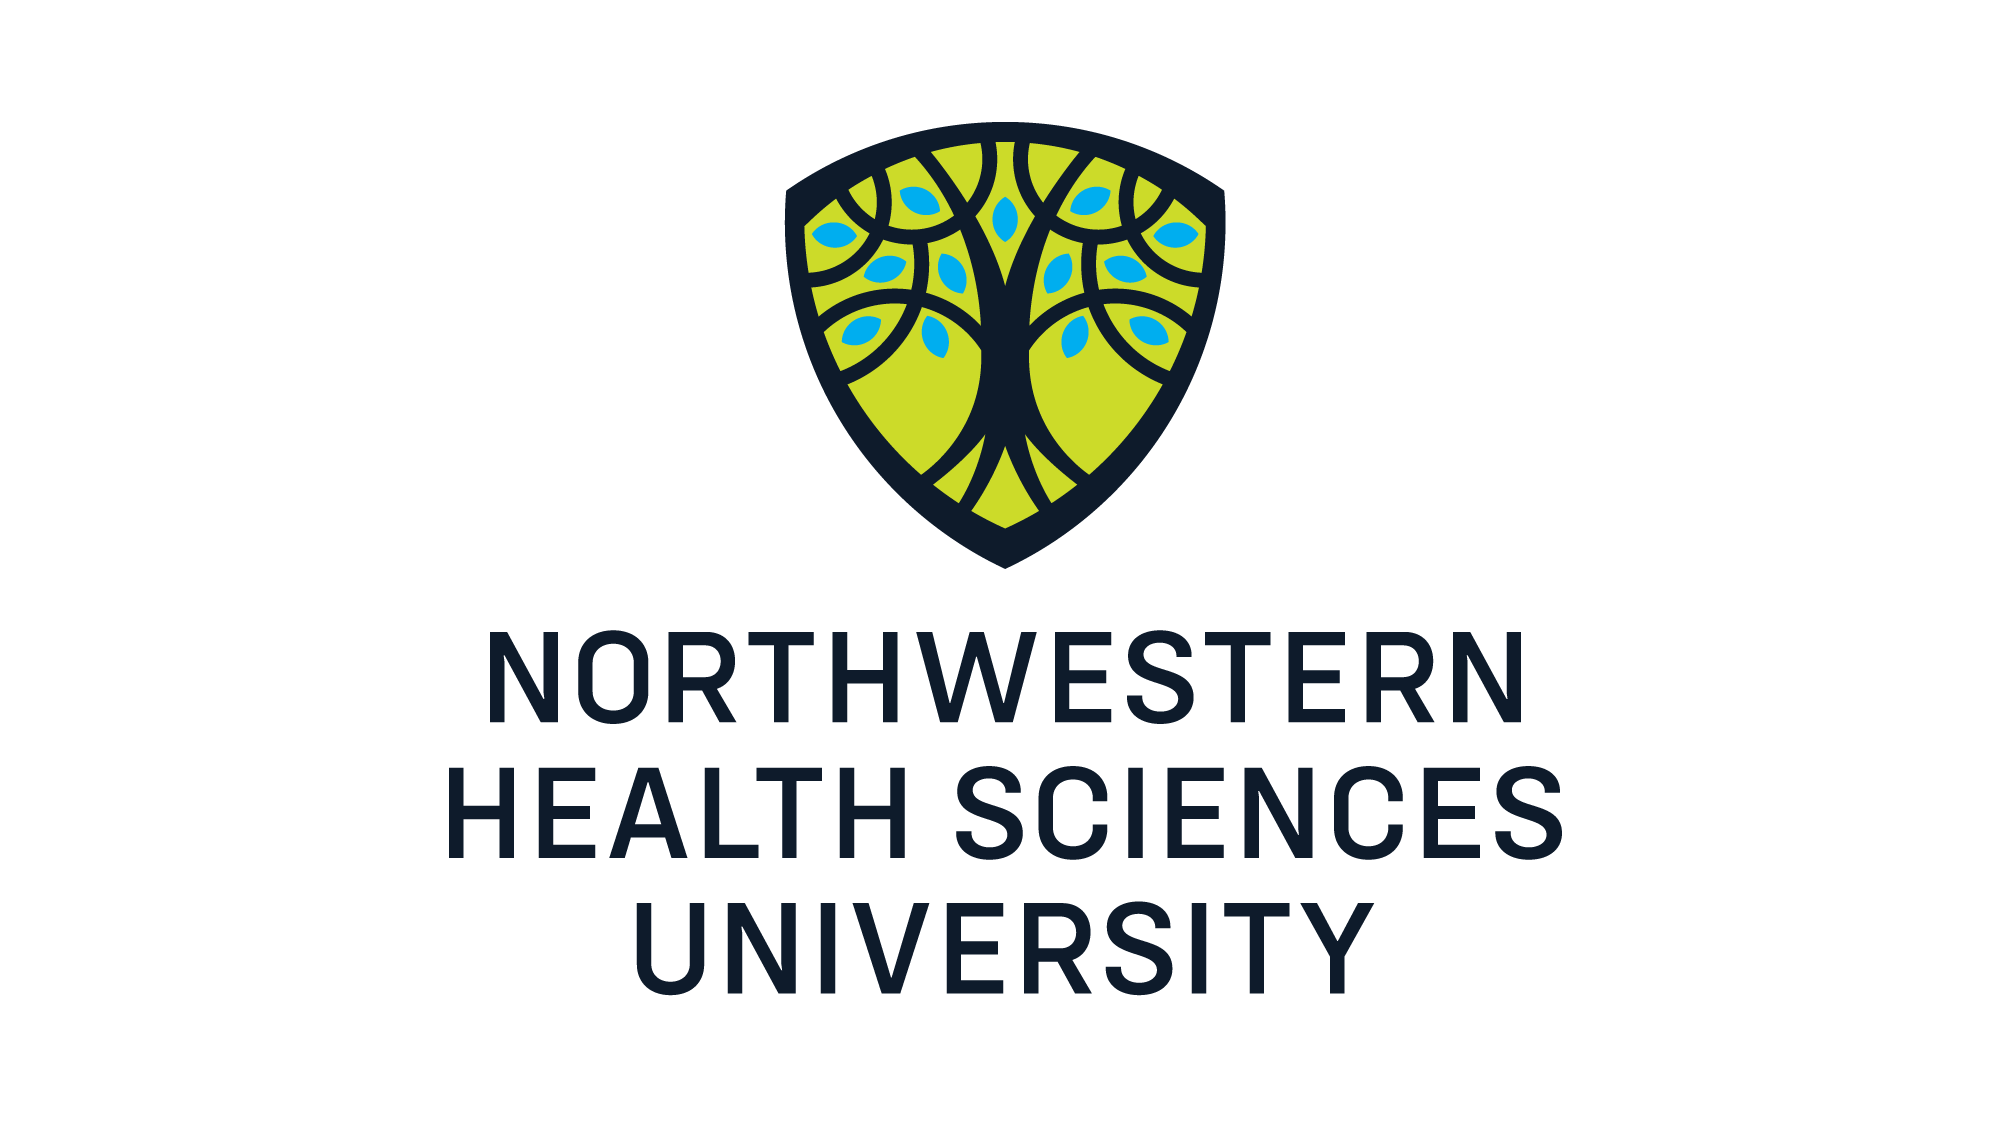 The logo for Northwestern Health Sciences University